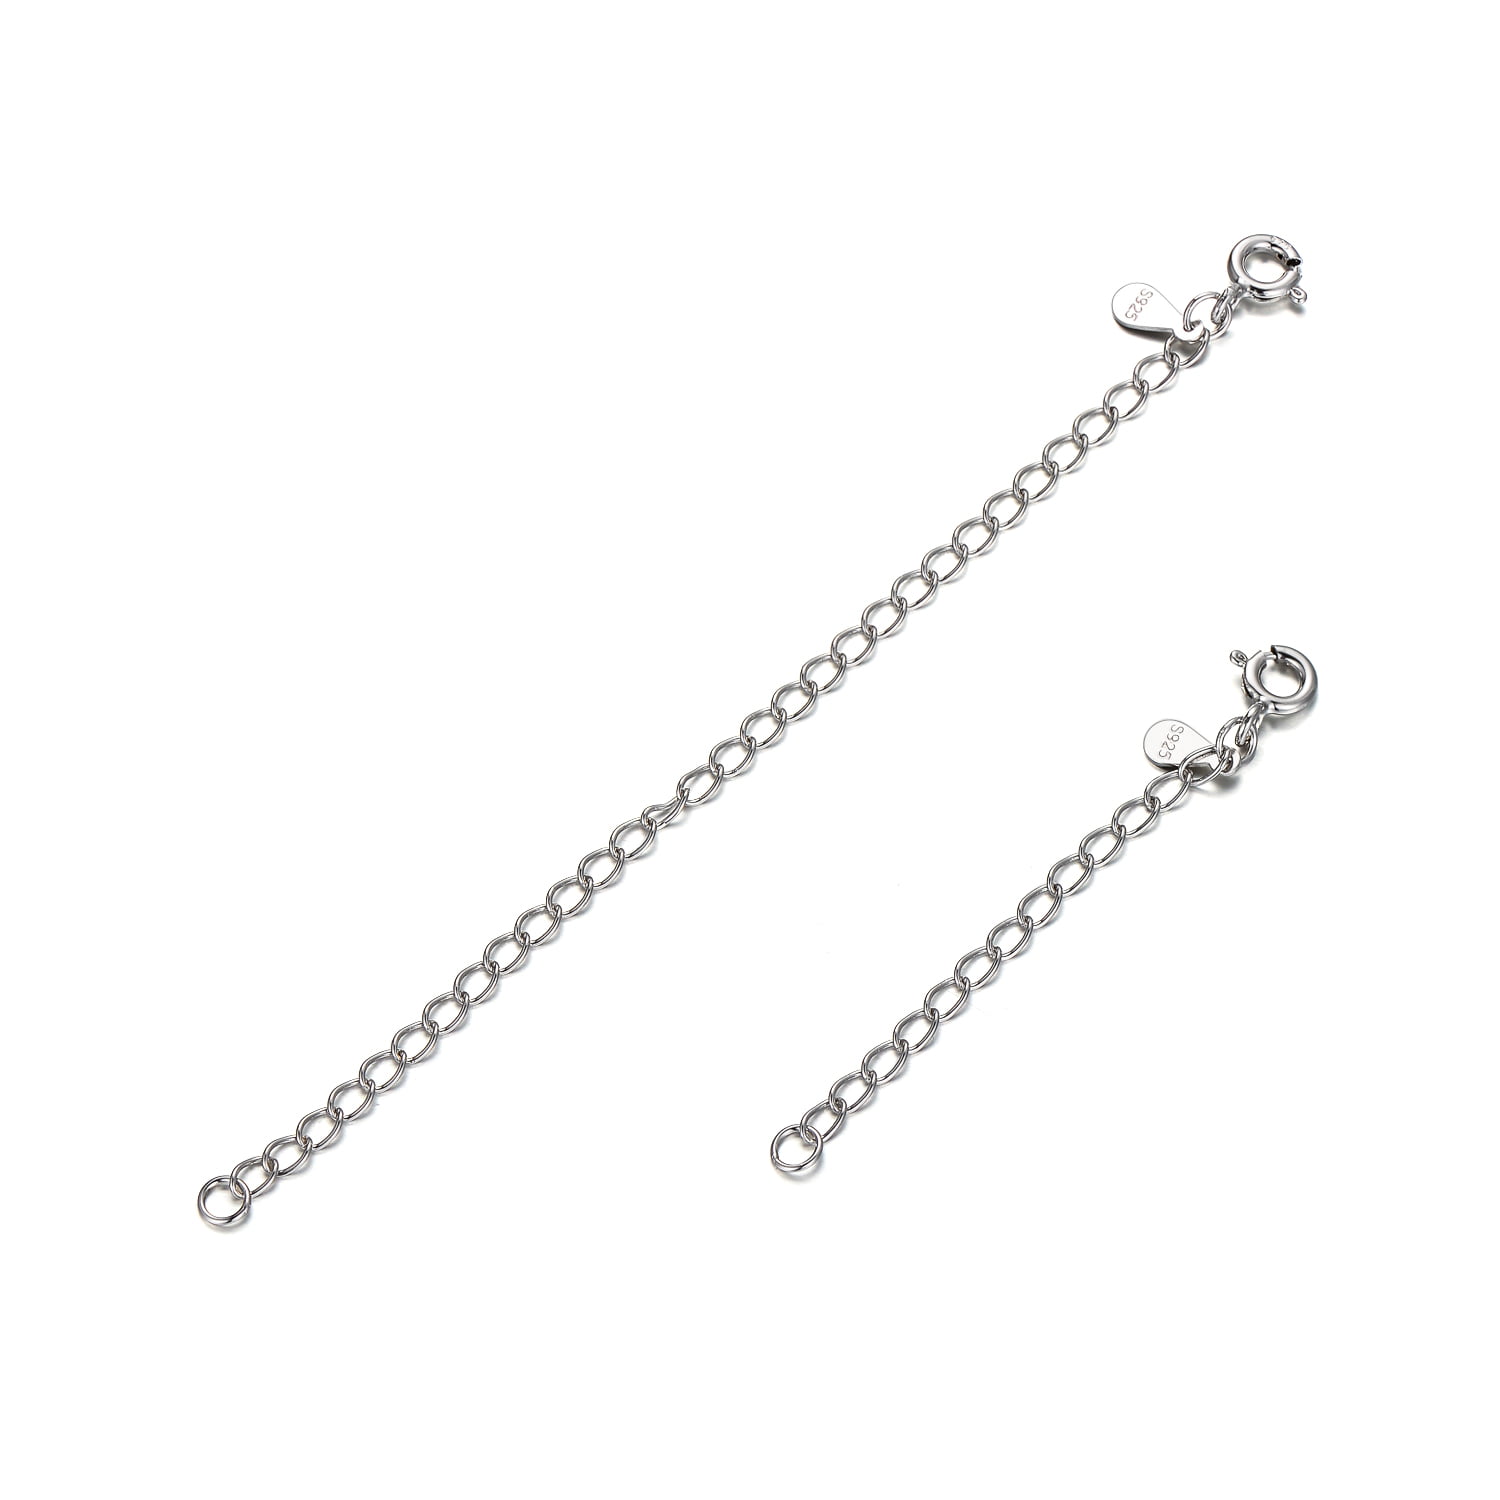 2 3 4 Silver Sterling Silver Necklace Bracelet Rolo Chain Extender 3pcs/Set